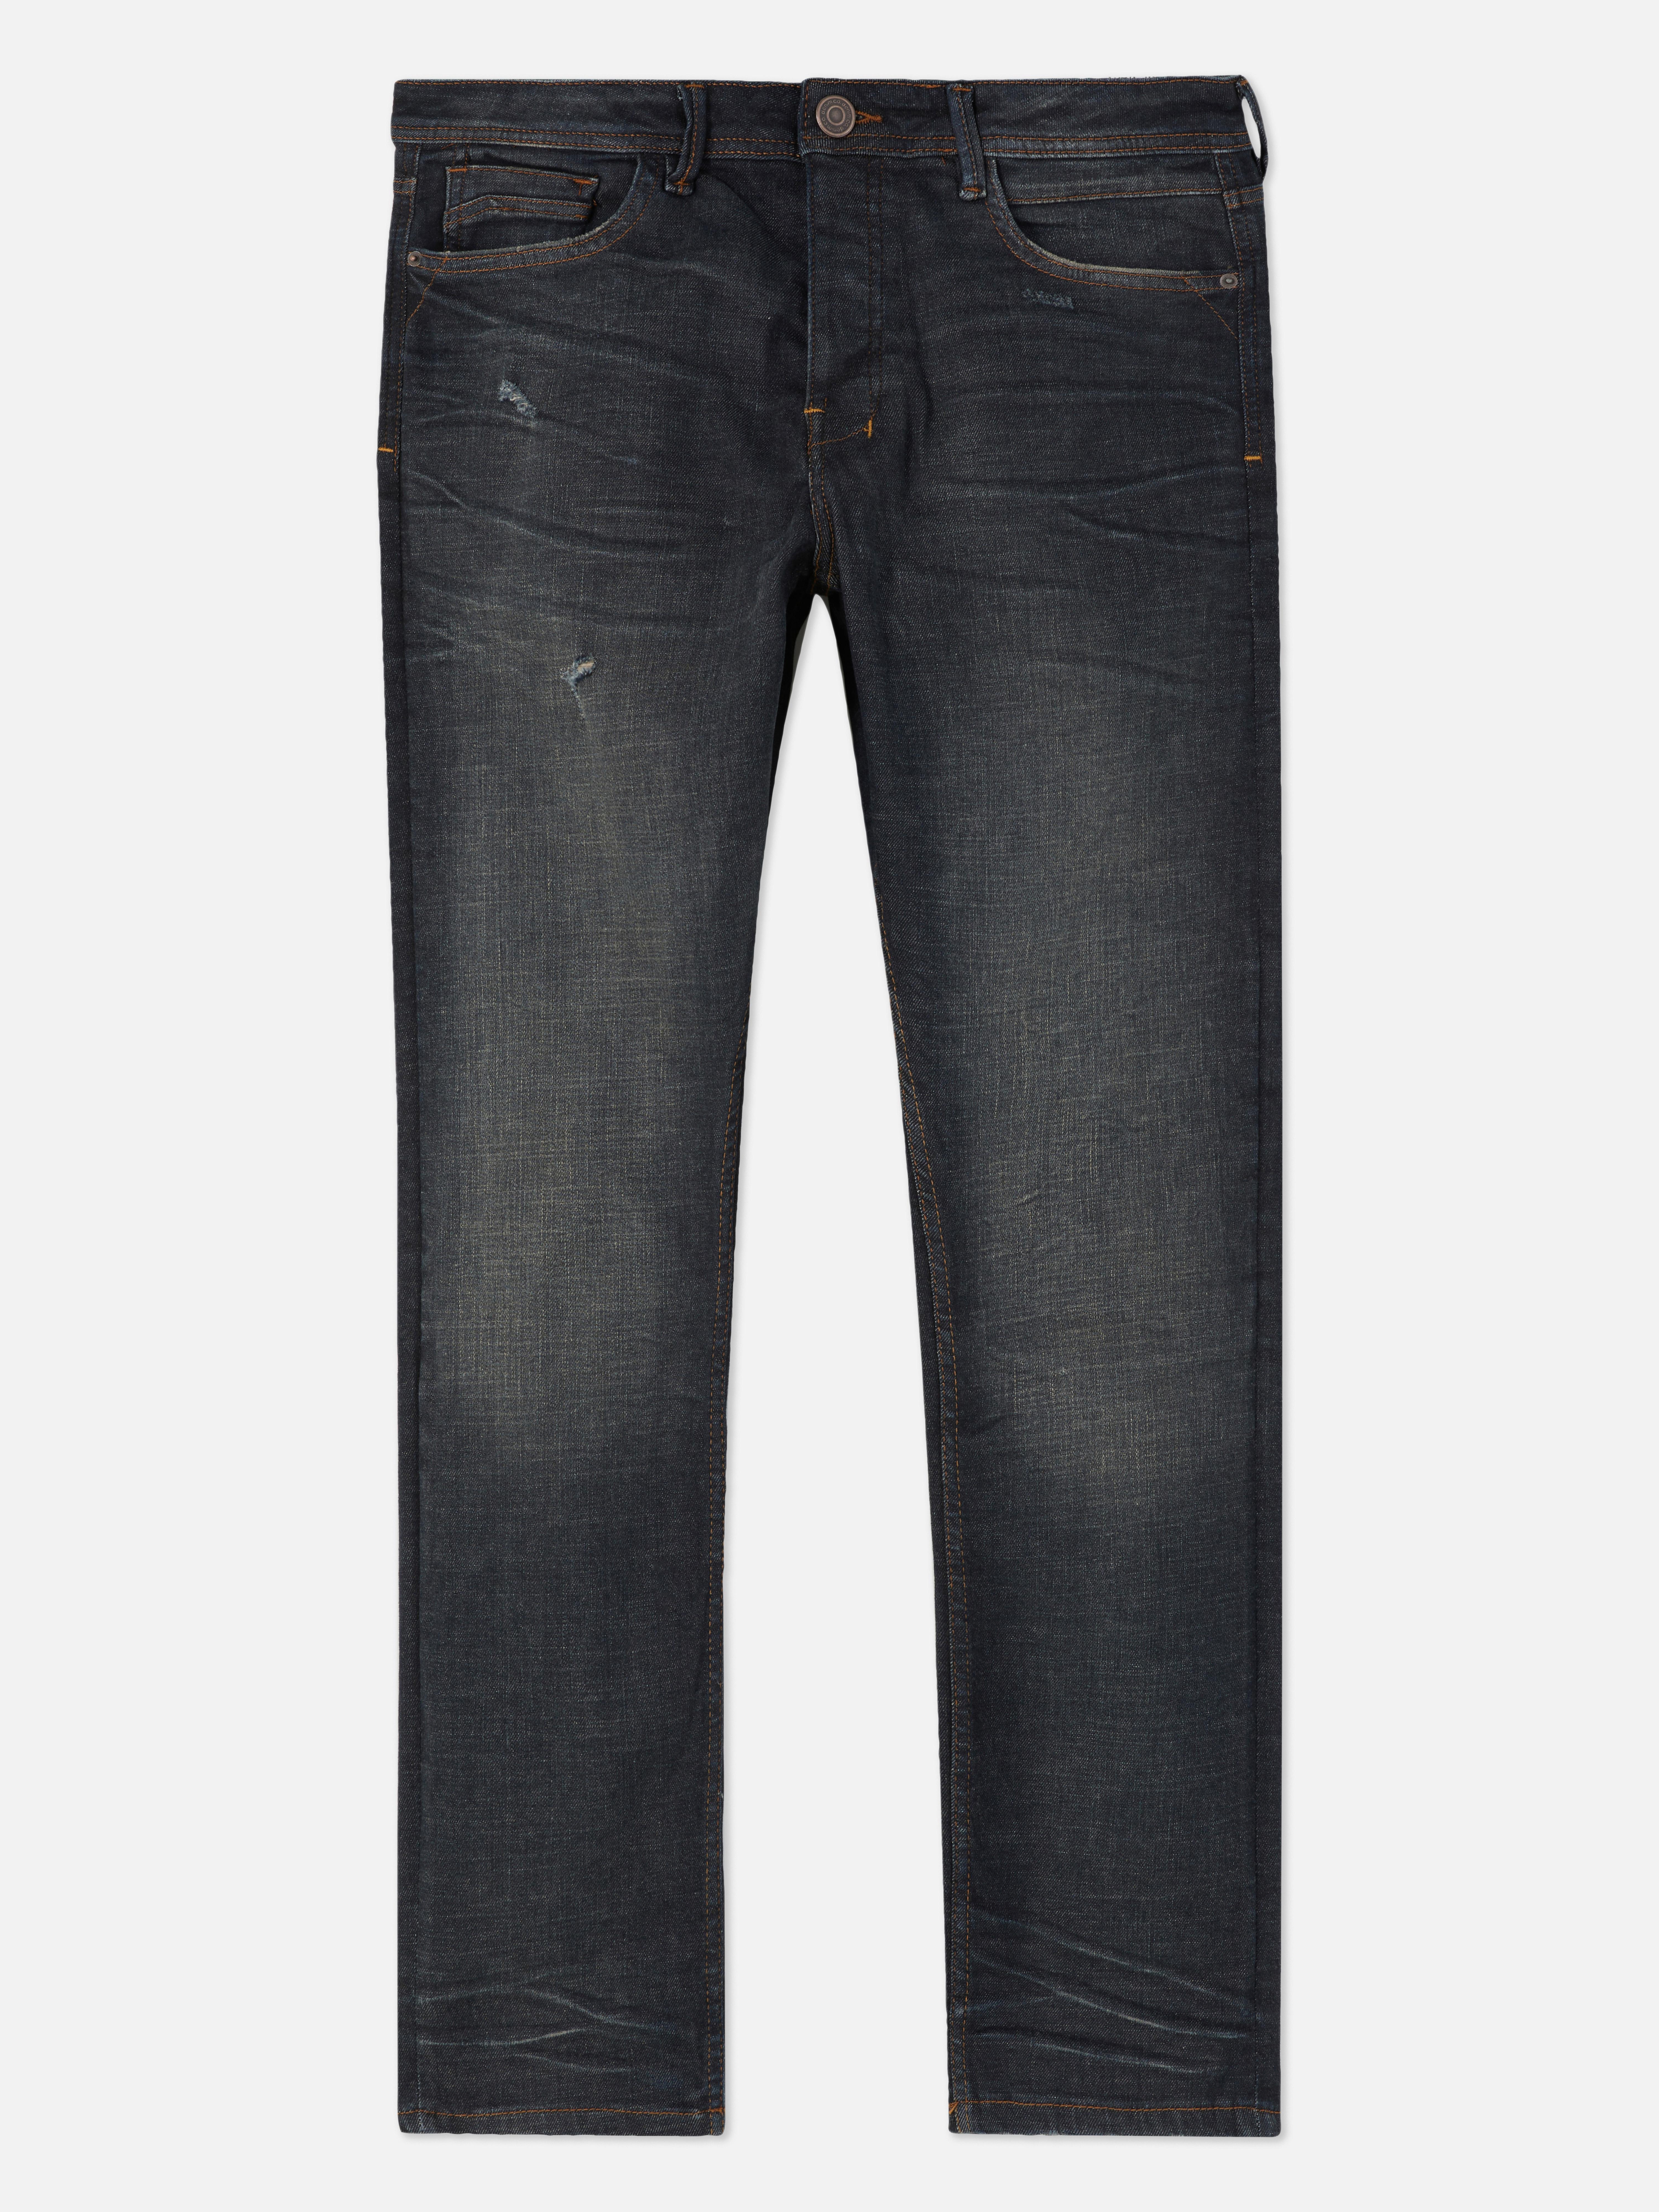 discount 95% MEN FASHION Jeans Basic Navy Blue Primark straight jeans 